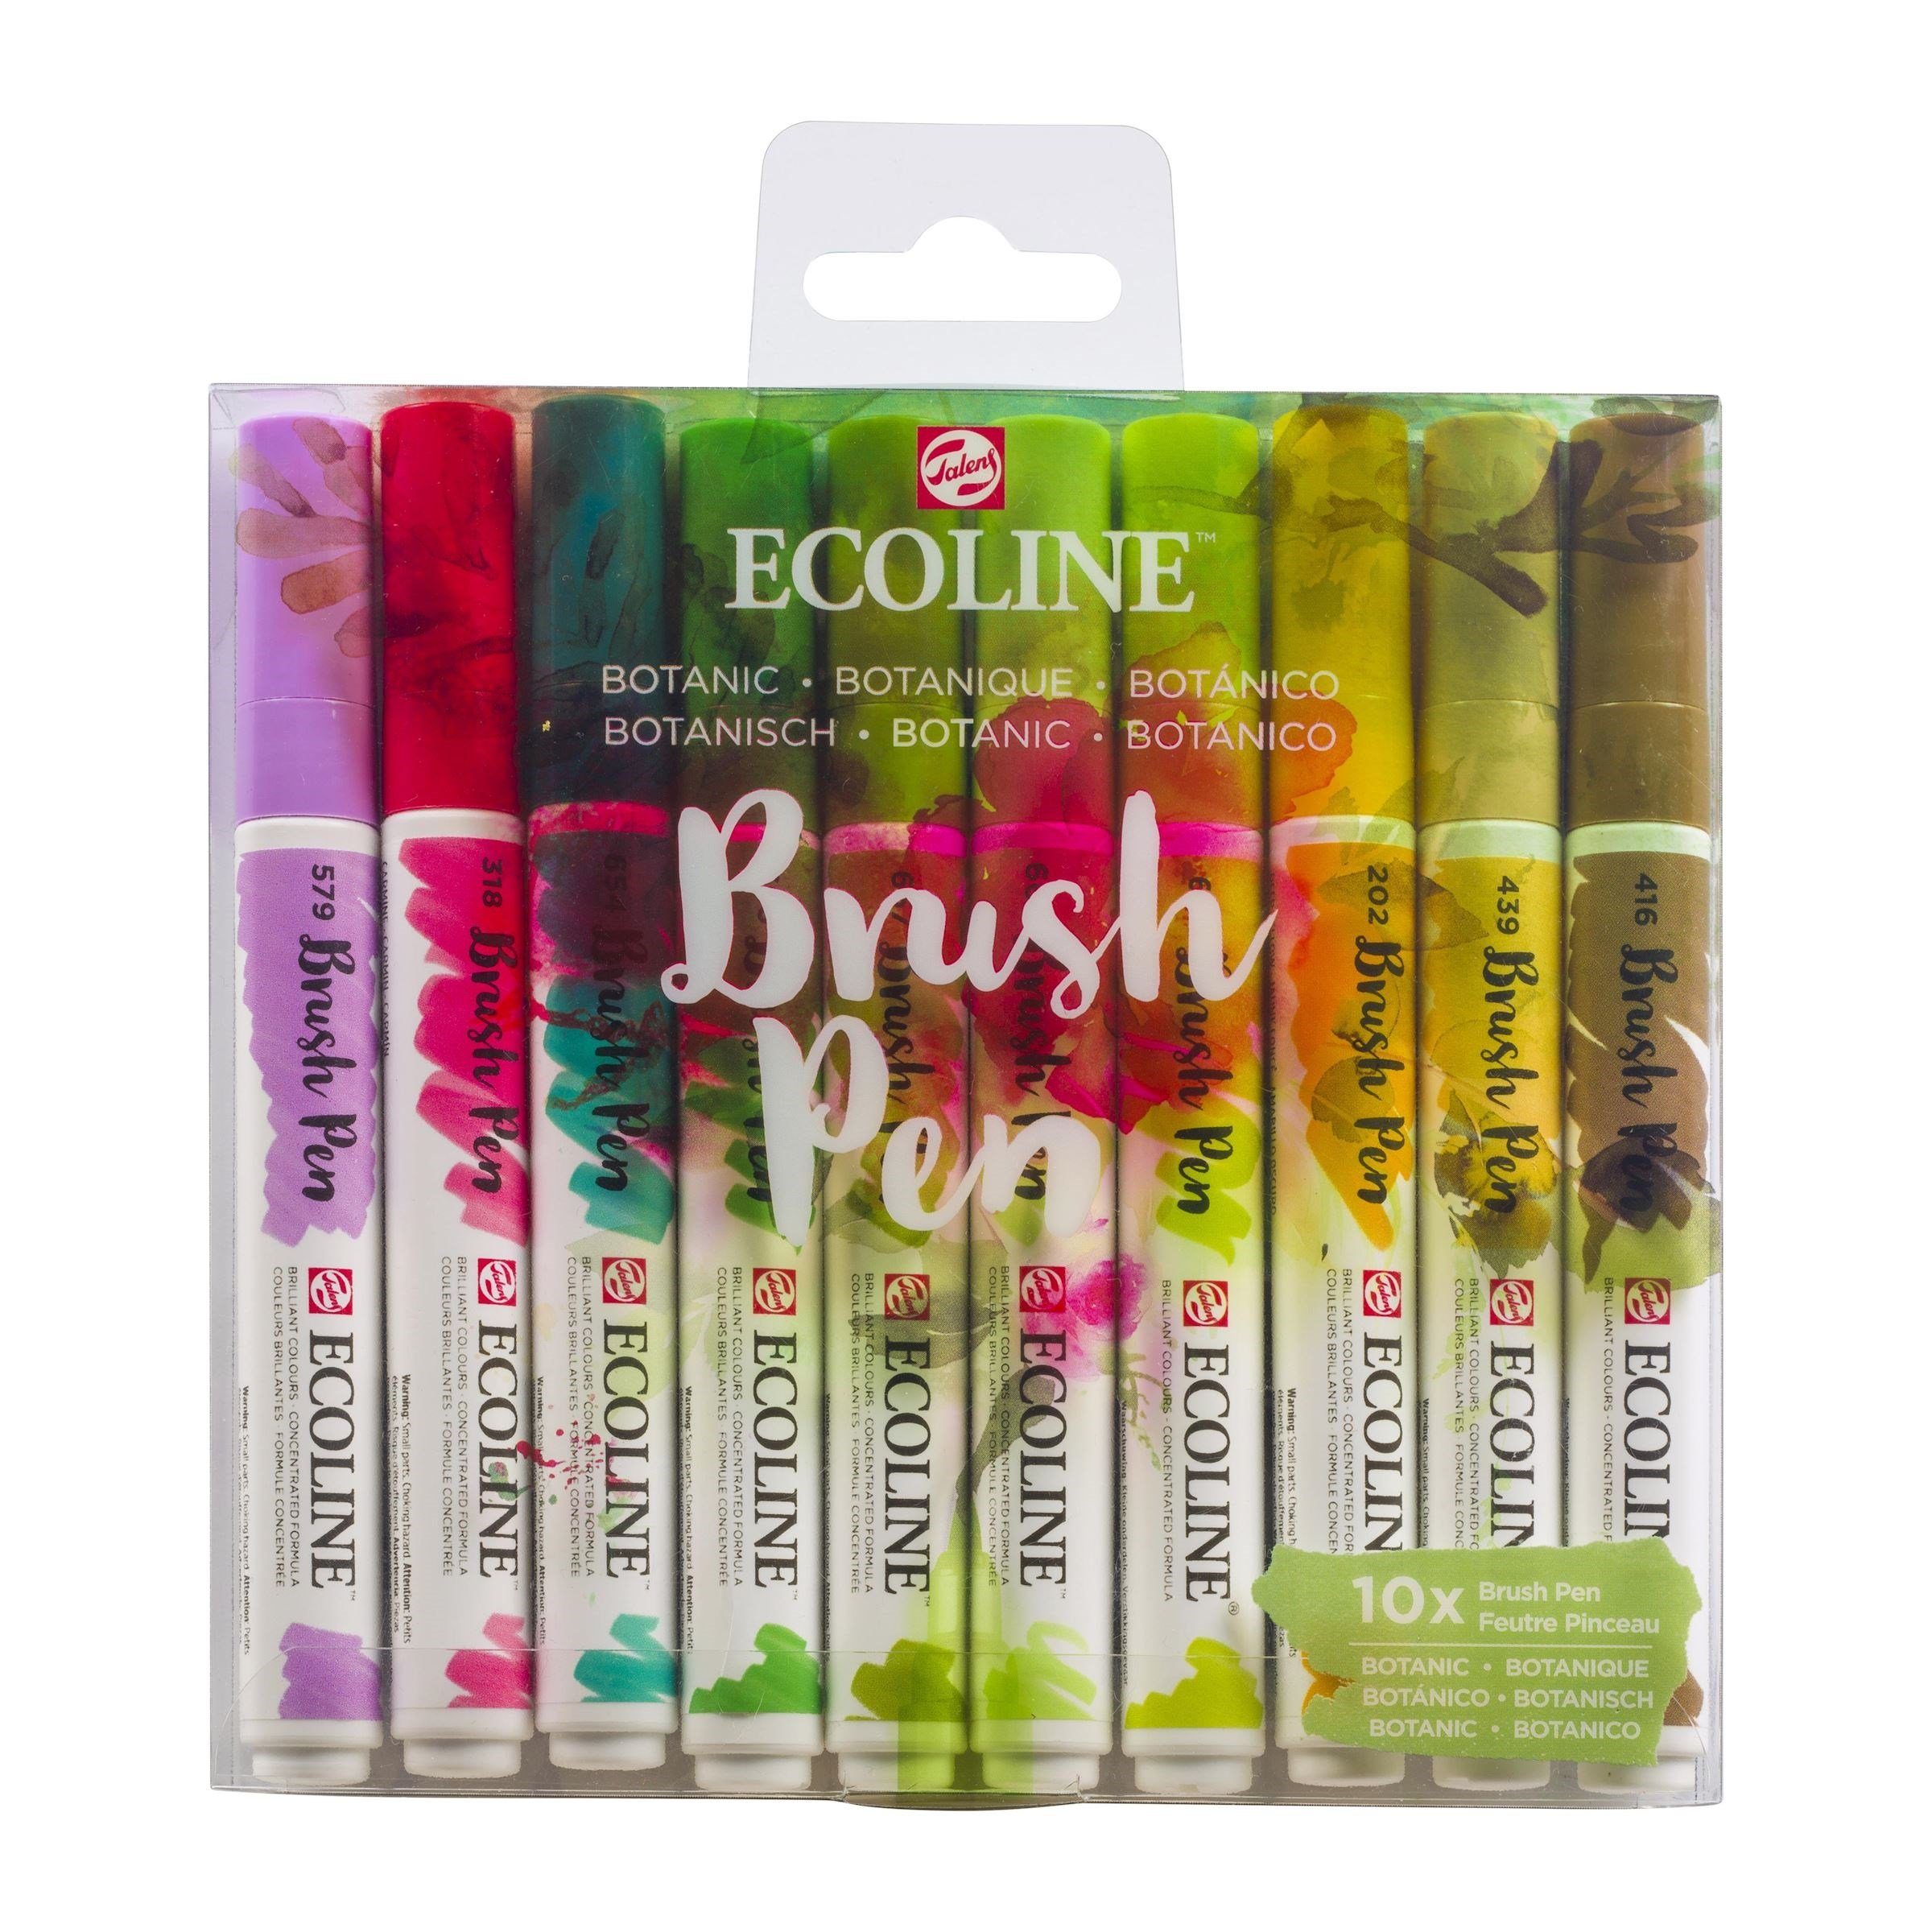 10 Brushpen verschiedene ECOLINE (Botanic) Set Farben Talens Aquarellstifte